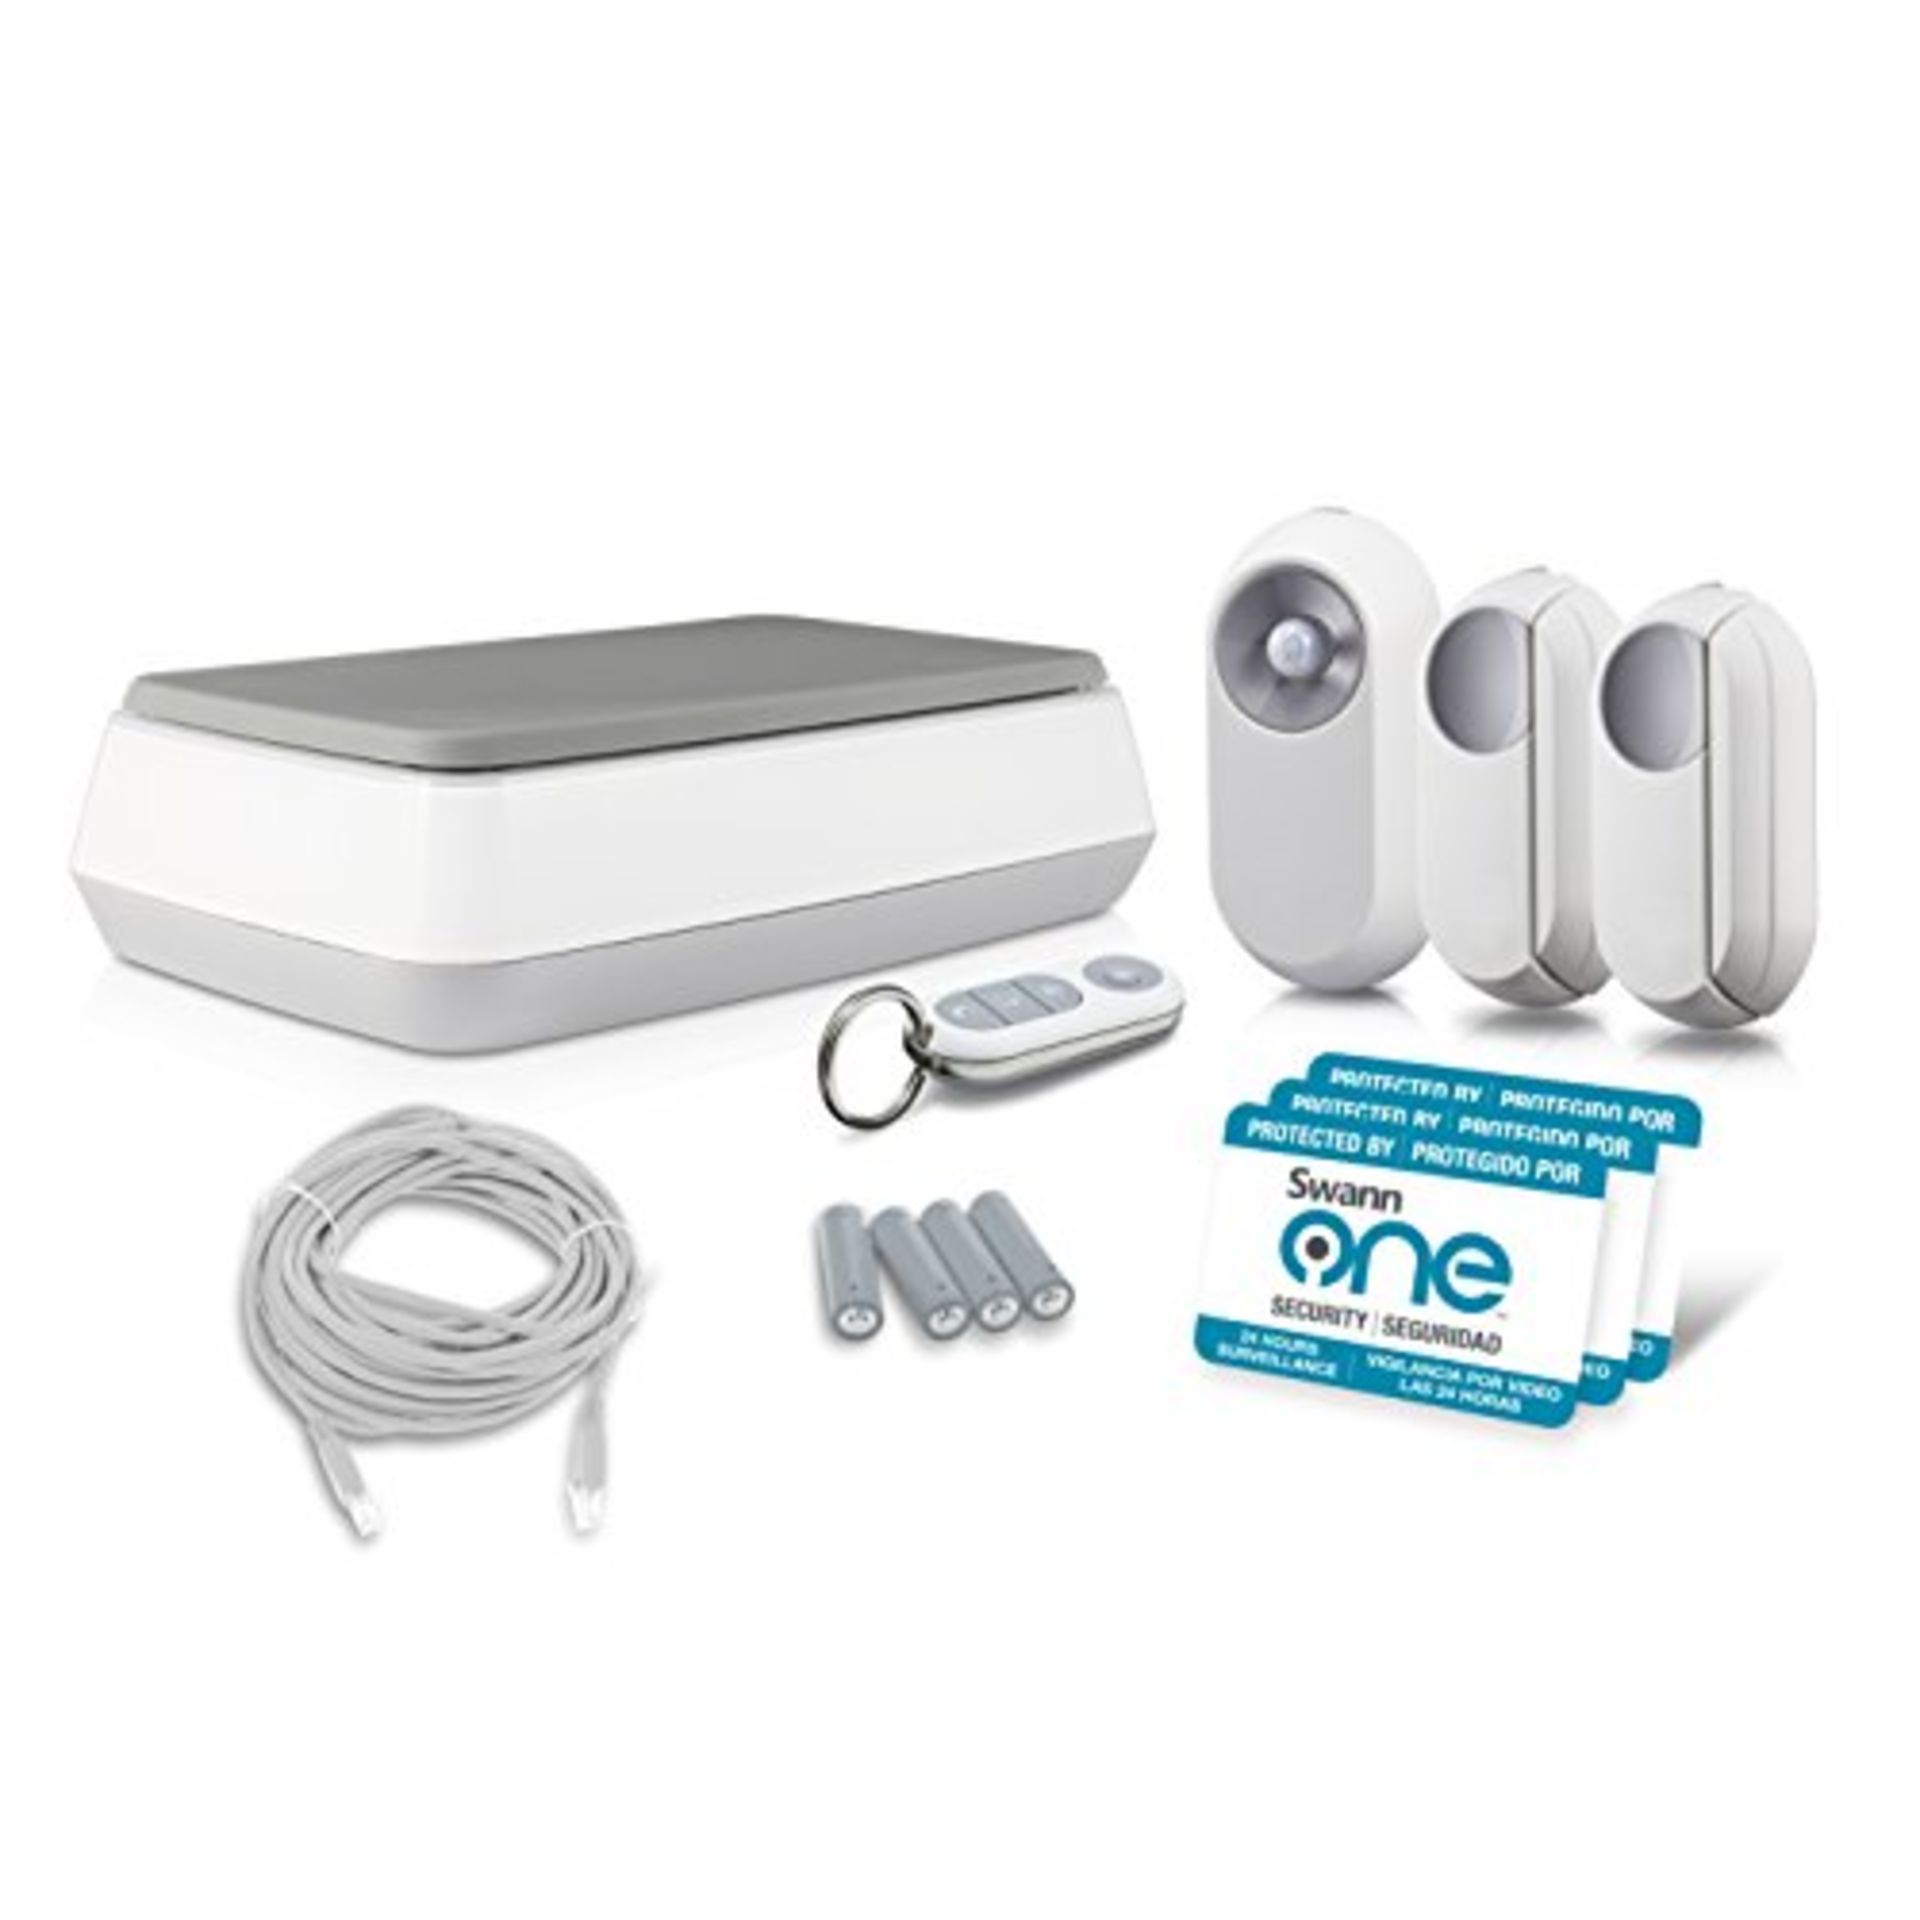 V *TRADE QTY* Grade A Swann One Alarm Starter Kit - Includes 1 x SmartHub 1 x Keyfob remote